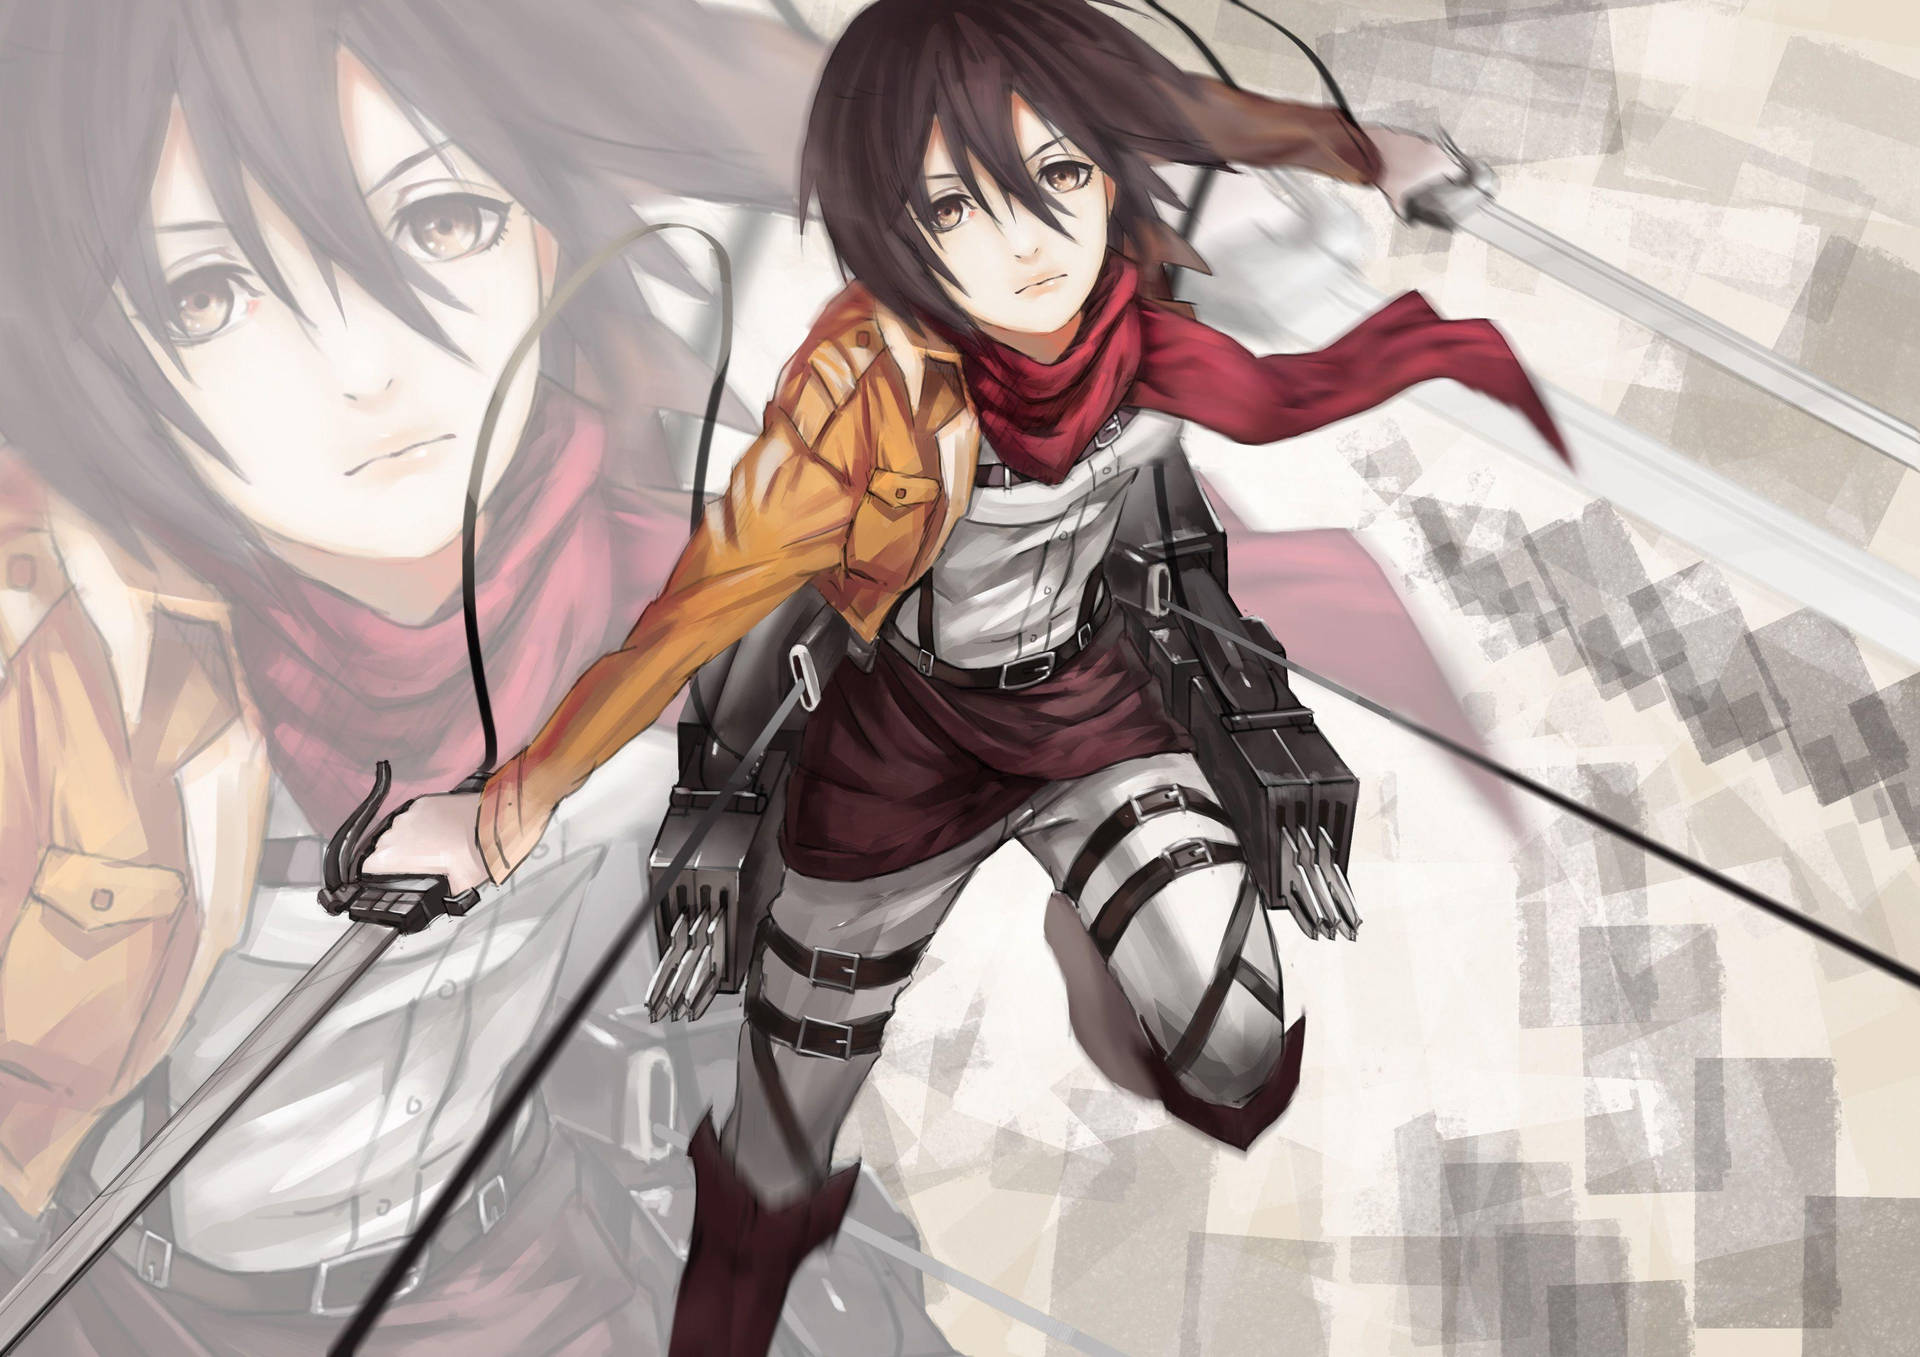 Mikasa Ackerman Battle Ready Background